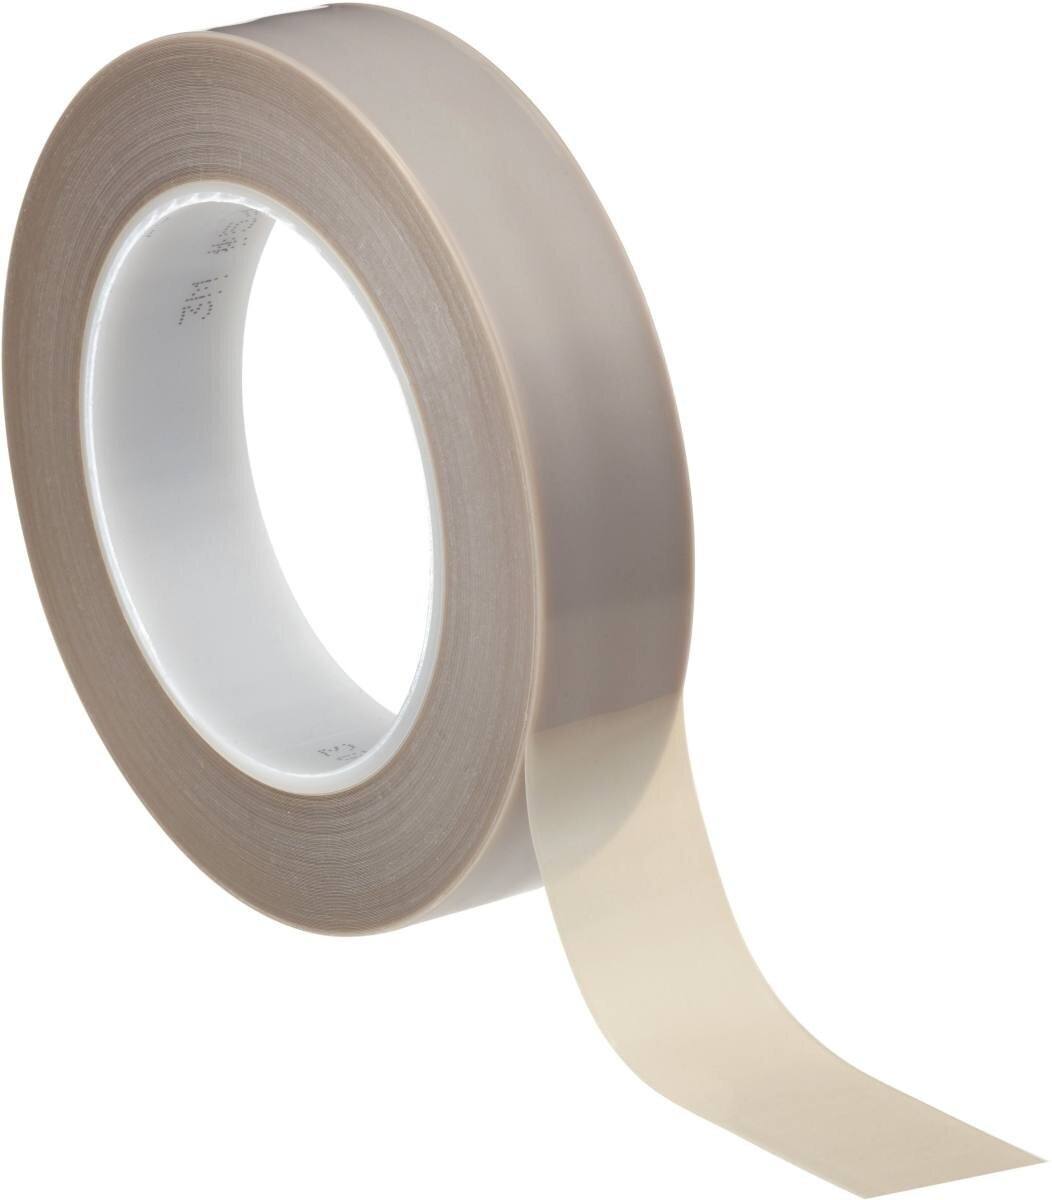 3M 5481 PTFE film adhesive tape 50mmx33m, 0.17mm, silicone